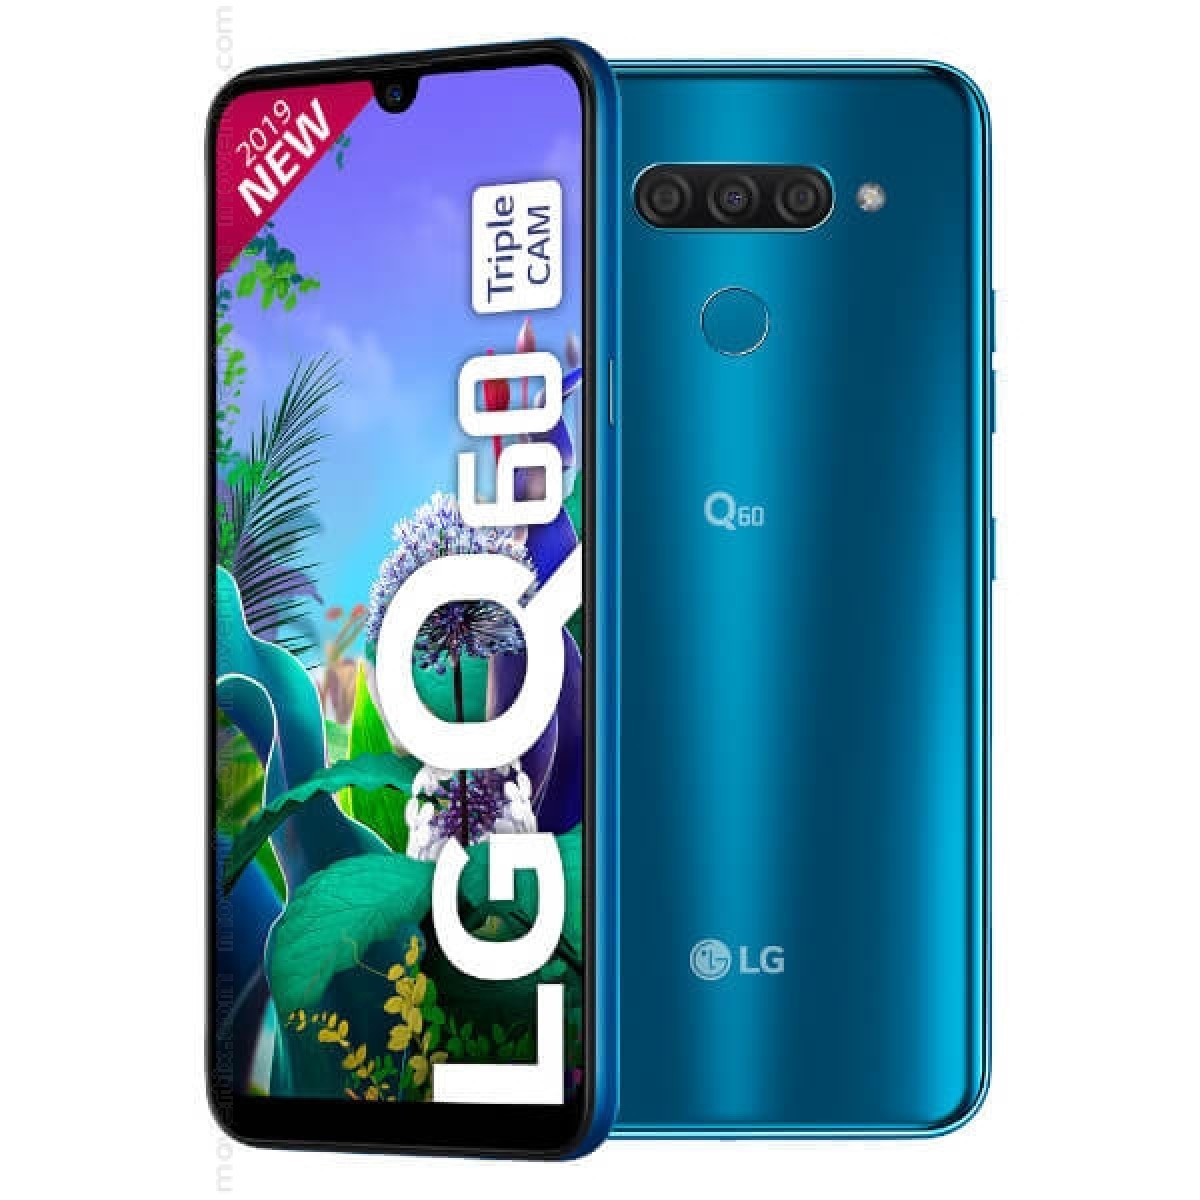 Image result for LG Q60